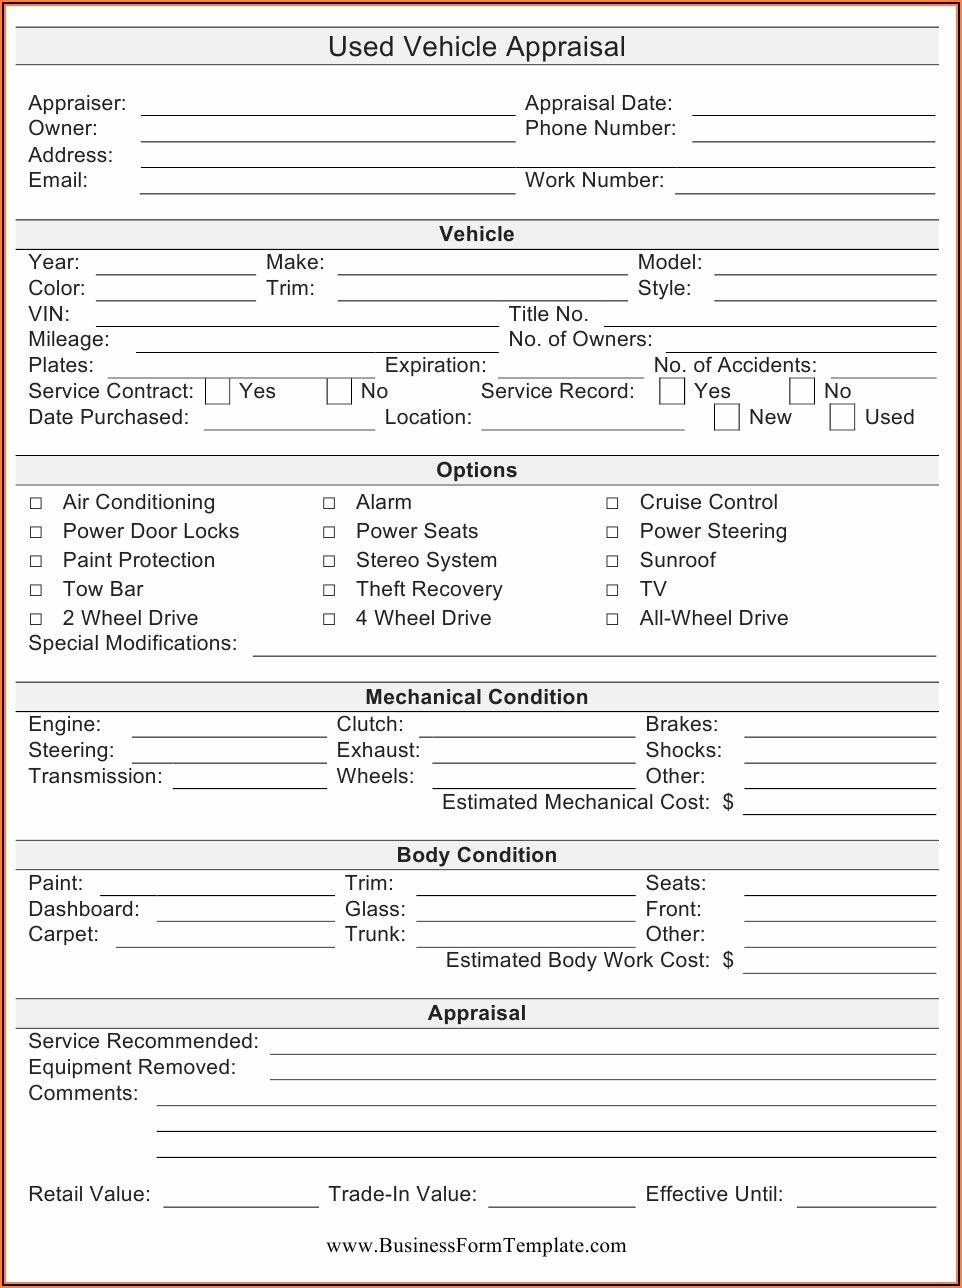 Ontario Auto Appraisal Form